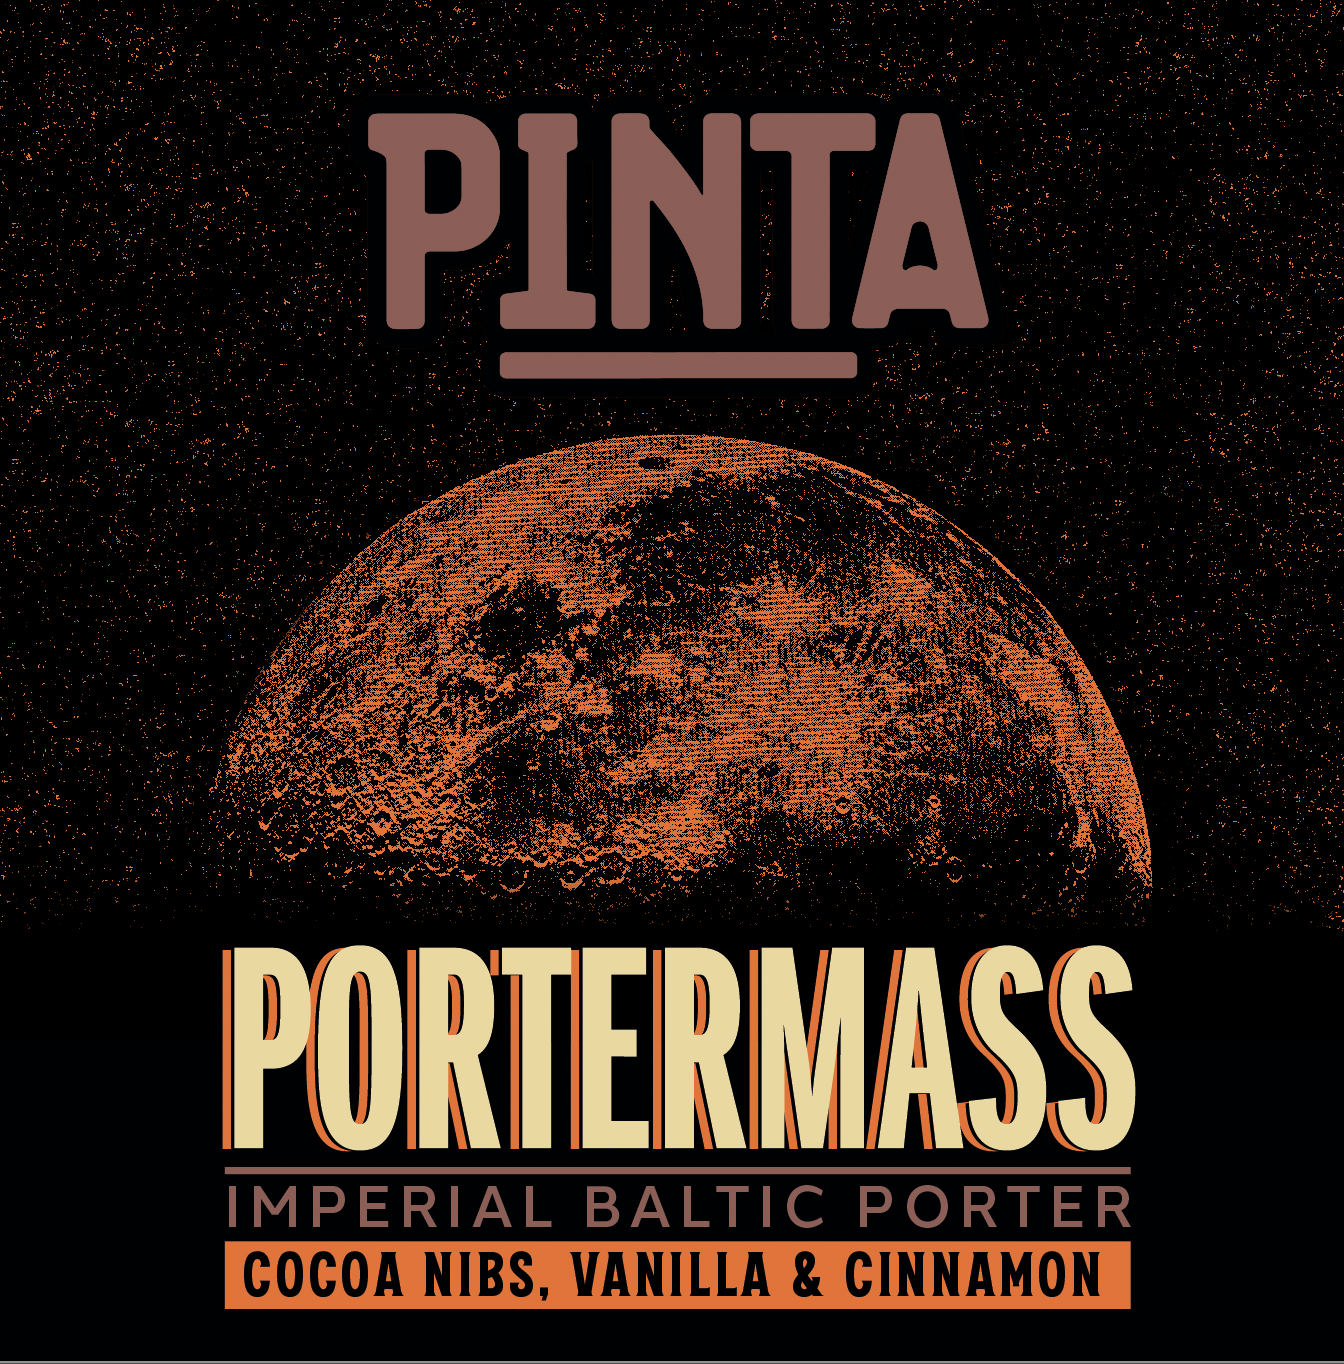 PINTA Portermass Imperial Baltic Porter with Cocoa Nibs, Vanilia, Cinamon